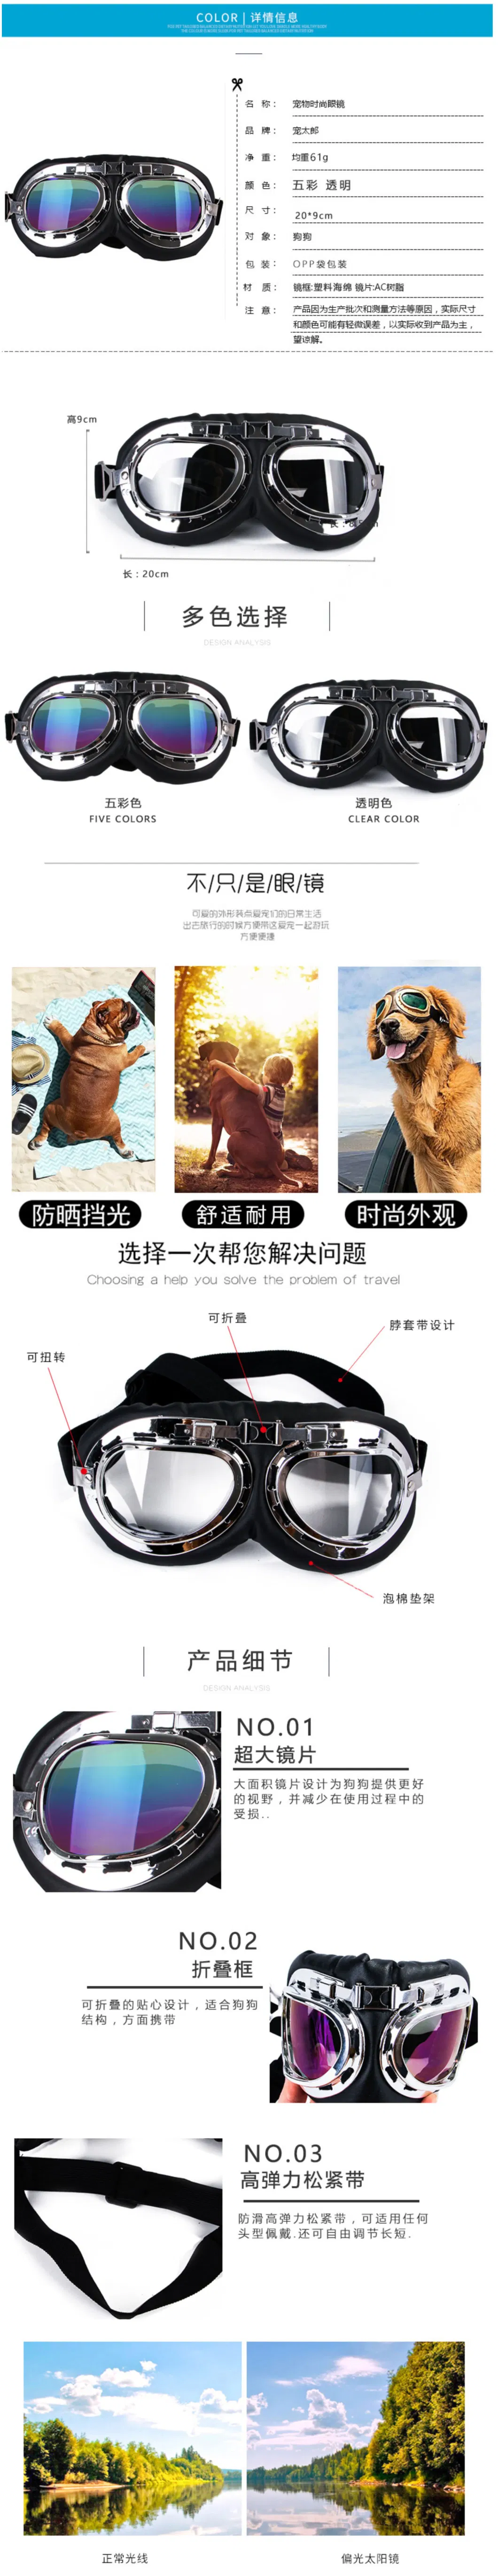 Newest Handsome Pet Glasses Classic Dog Sunglasses Large Frame Dog Harley Glasses Pet Accessories